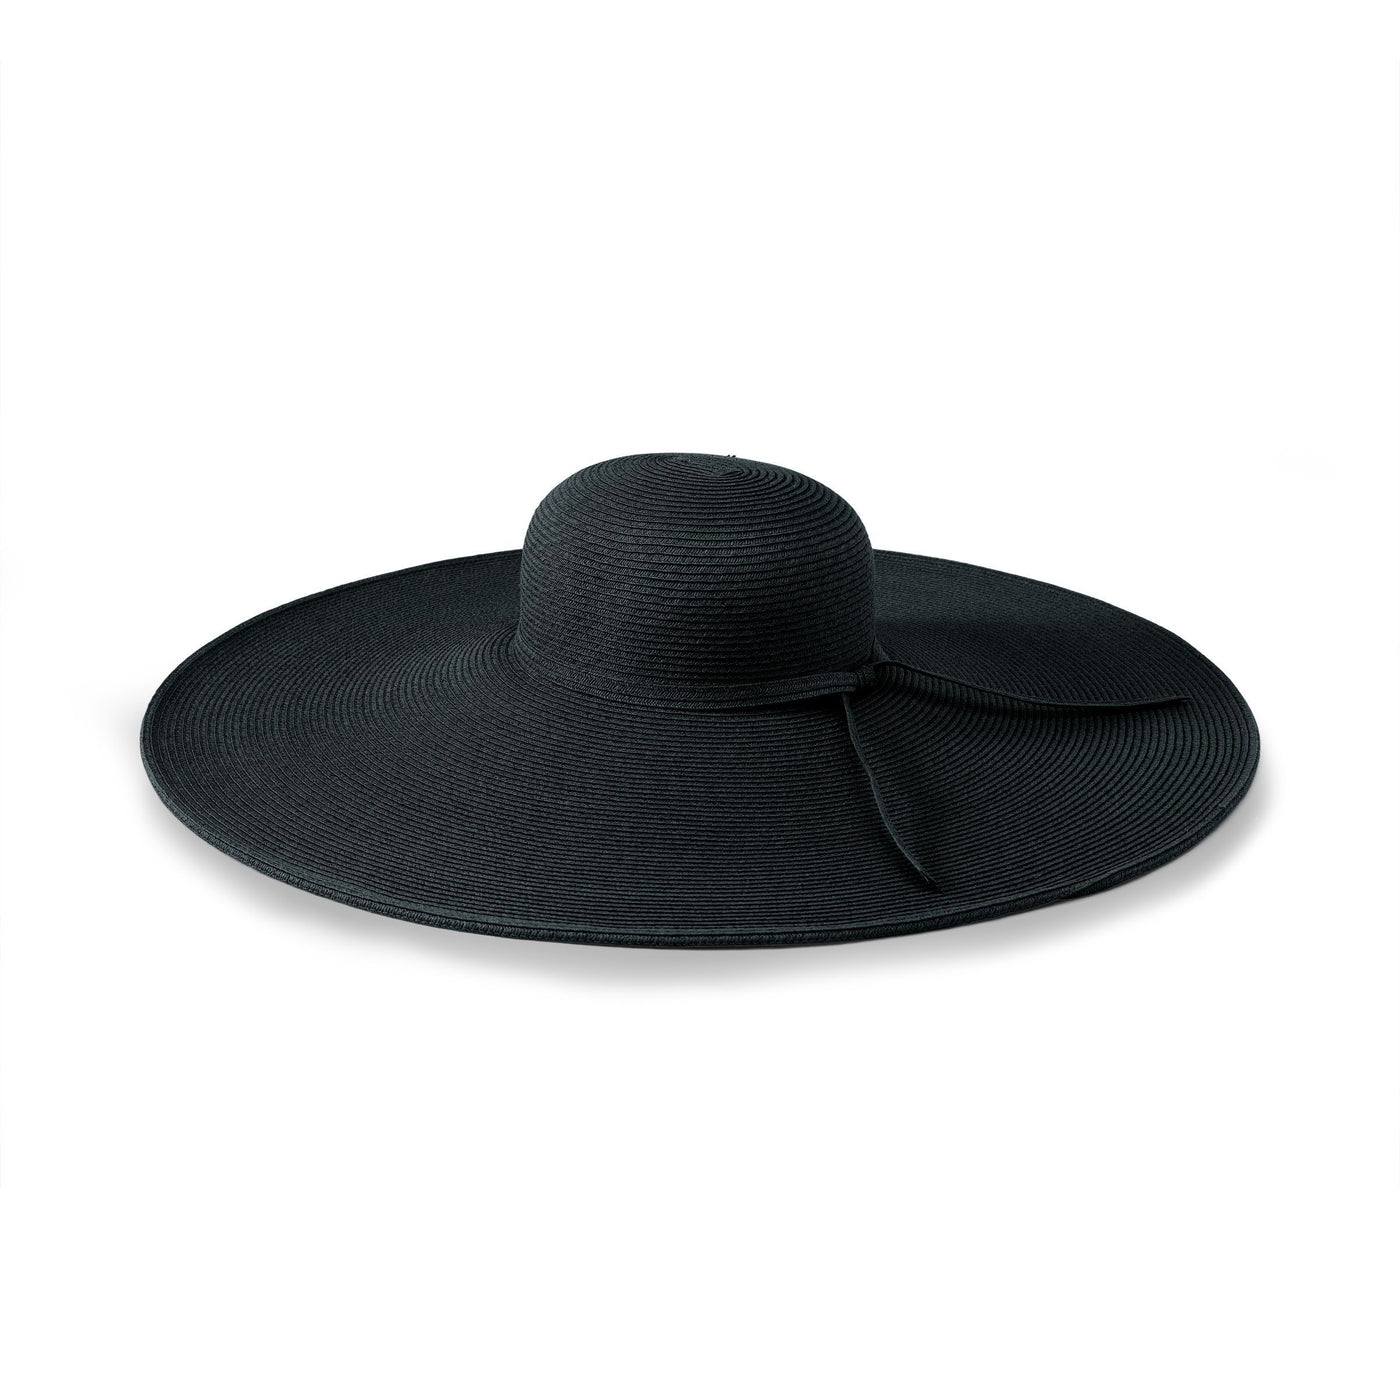 Hats - Women's Ultrabraid XL Brim Hat